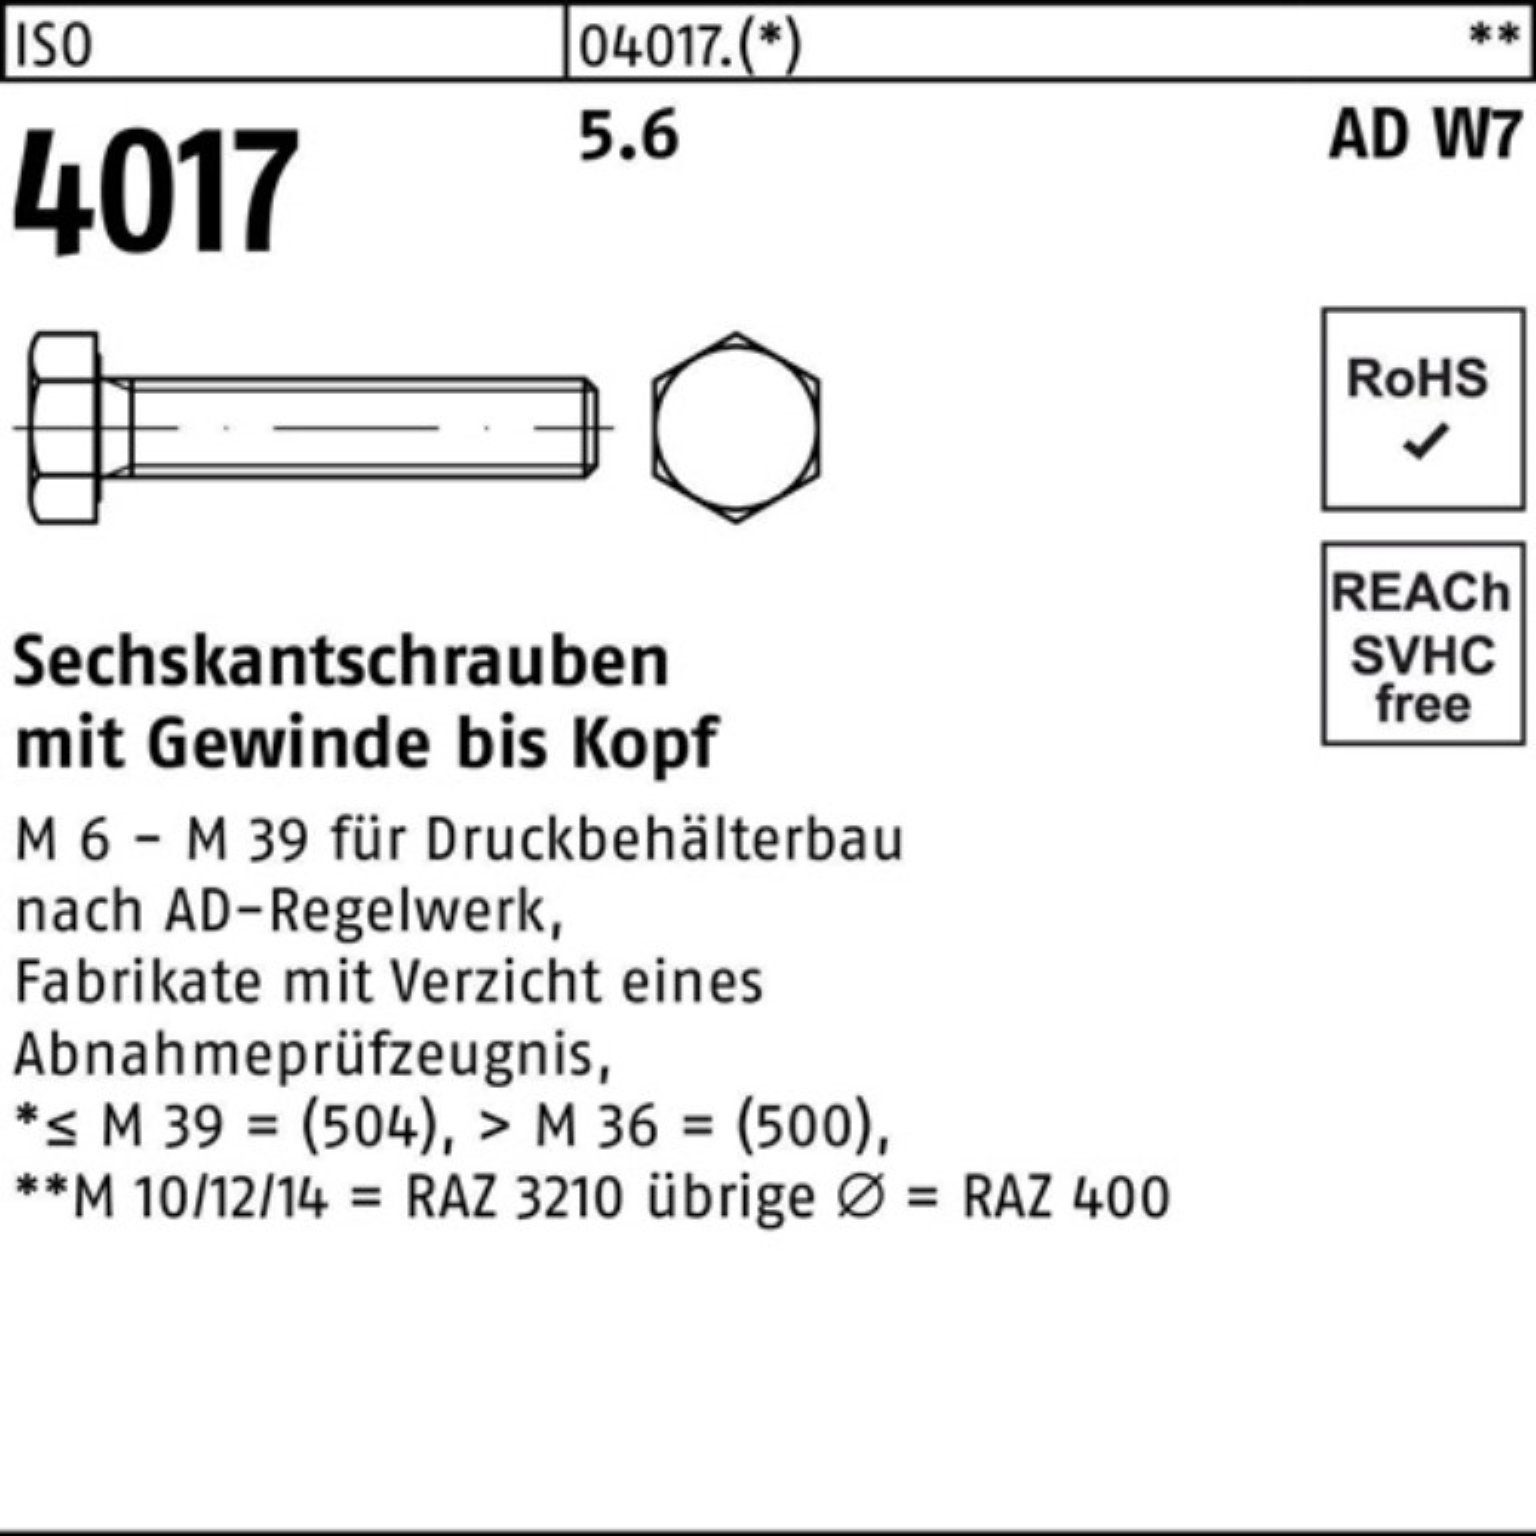 Bufab Sechskantschraube 100er Pack Sechskantschraube ISO 4017 VG M36x 100 5.6 AD W7 1 Stück I